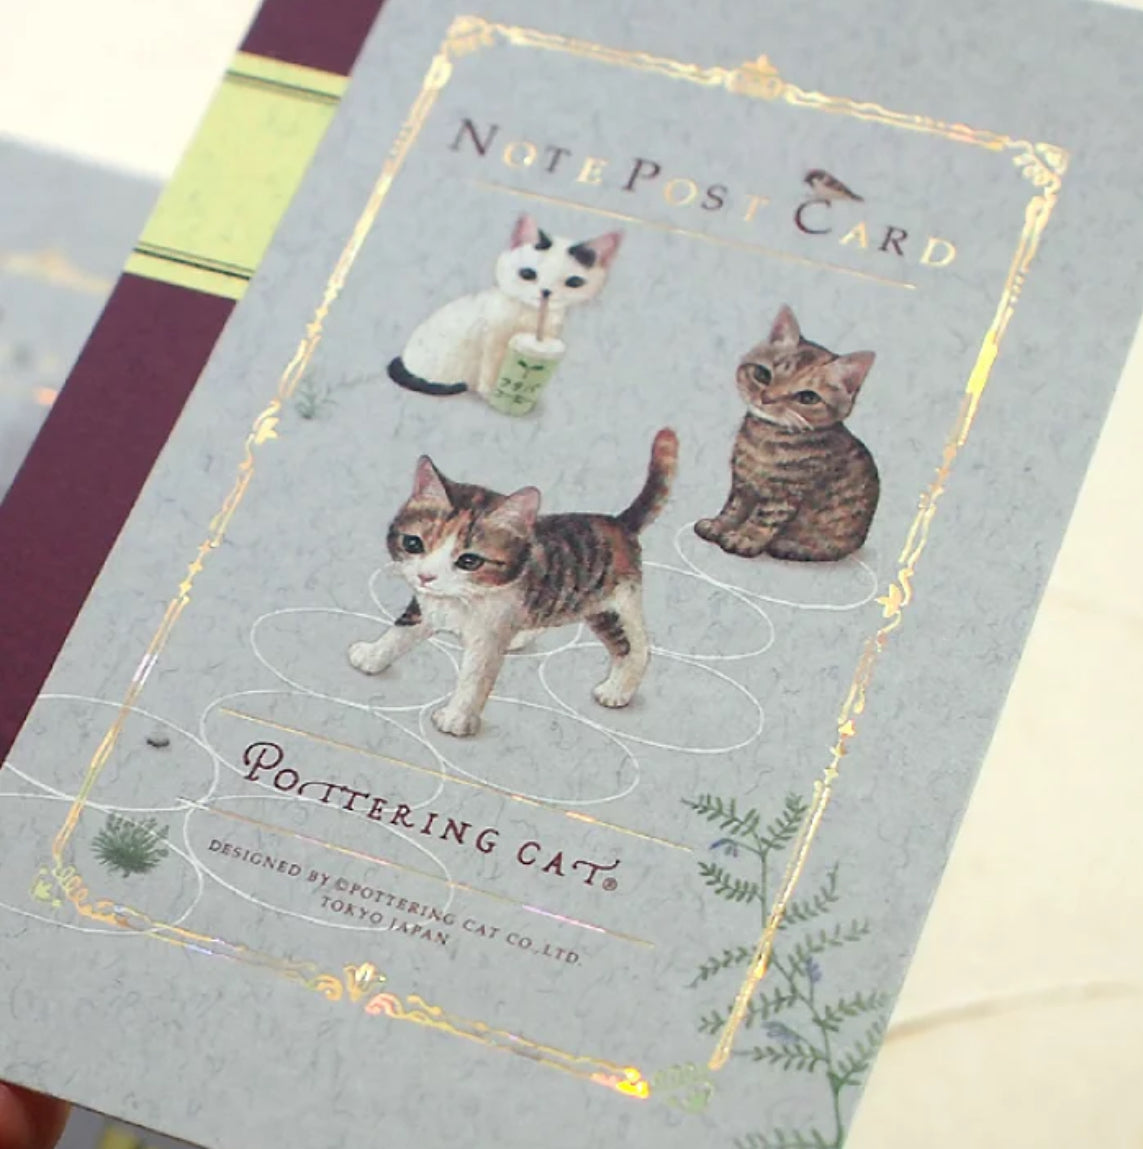 日本 Pottering Cats 貓咪館藏 Notebook Postcard系列